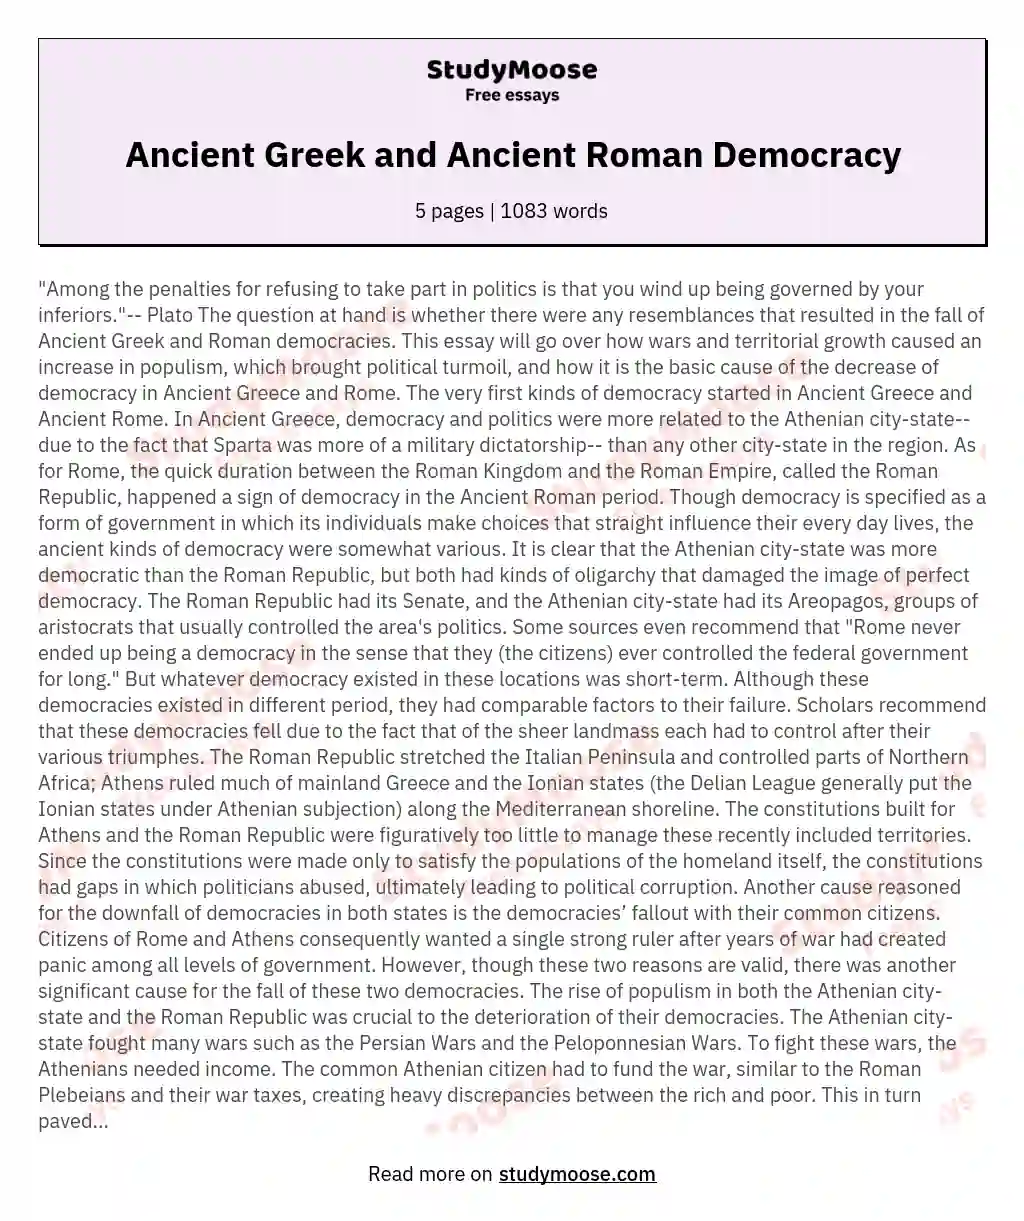 Ancient Greek and Ancient Roman Democracy